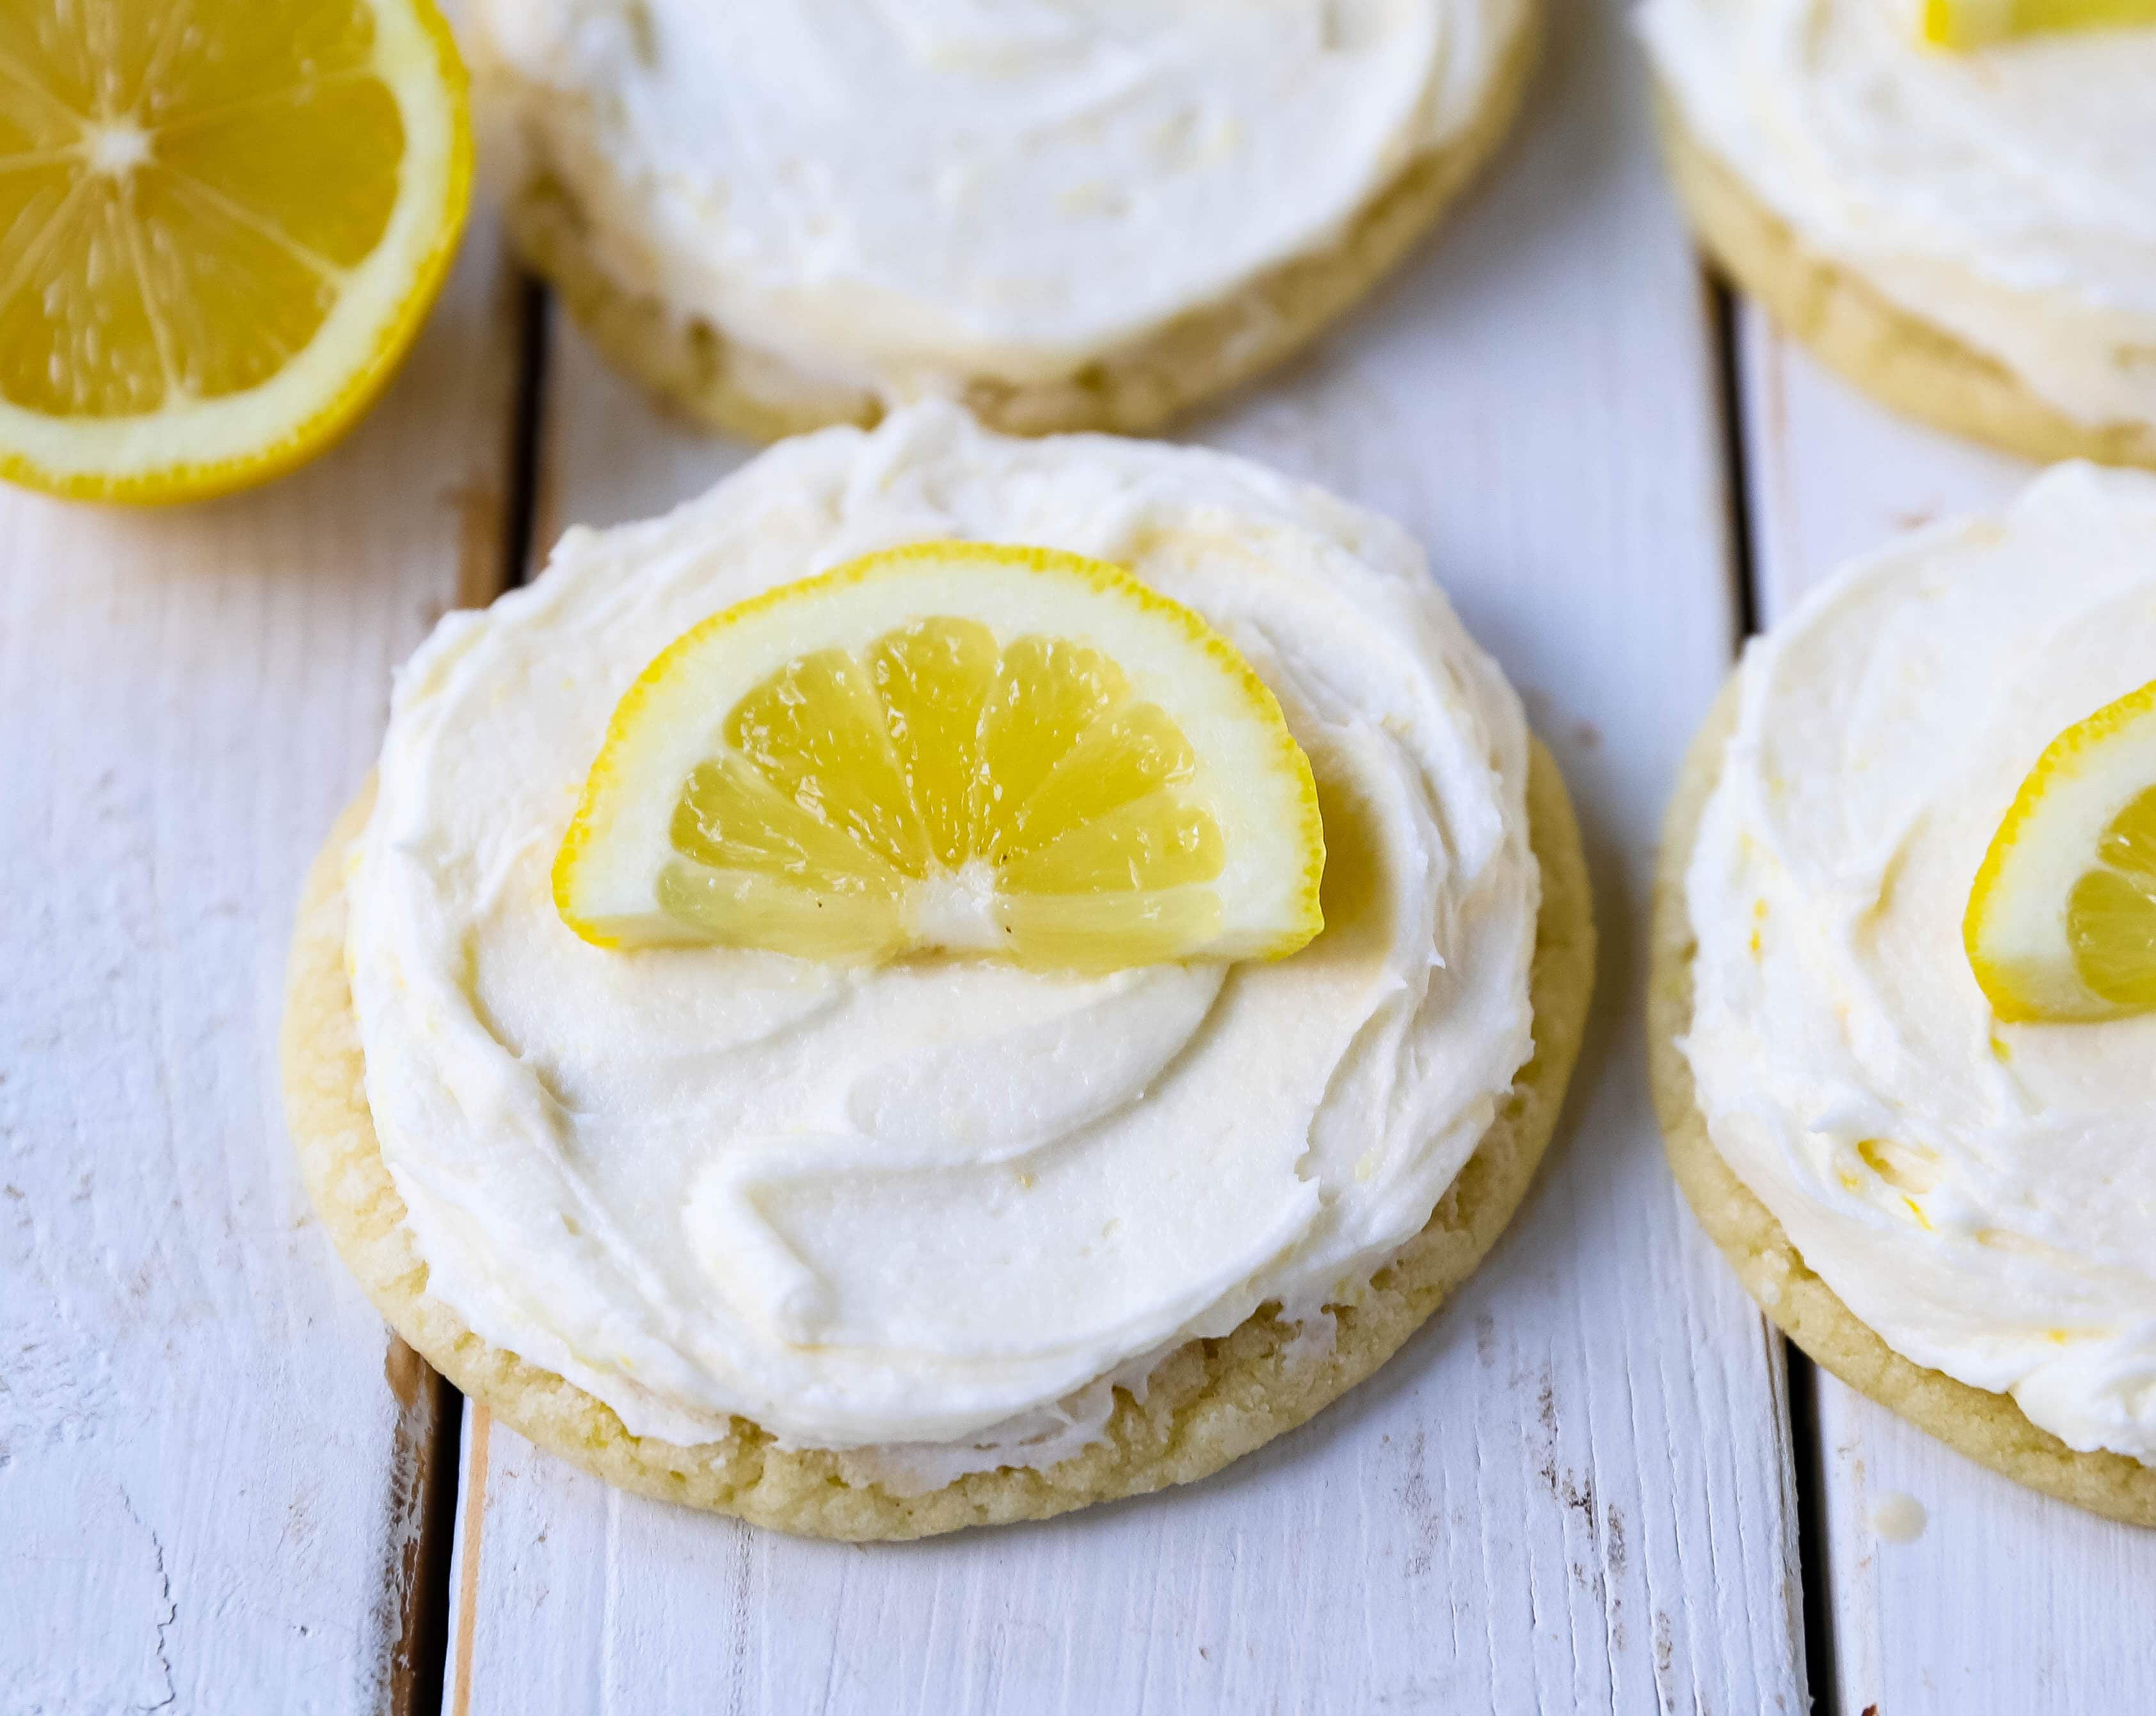 Frosted Lemon Cookies Soft chewy lemon cookies with fresh lemon cream cheese frosting. The perfect frosted lemon cookie recipe! www.modernhoney.com #lemon #lemoncookies #lemondesserts